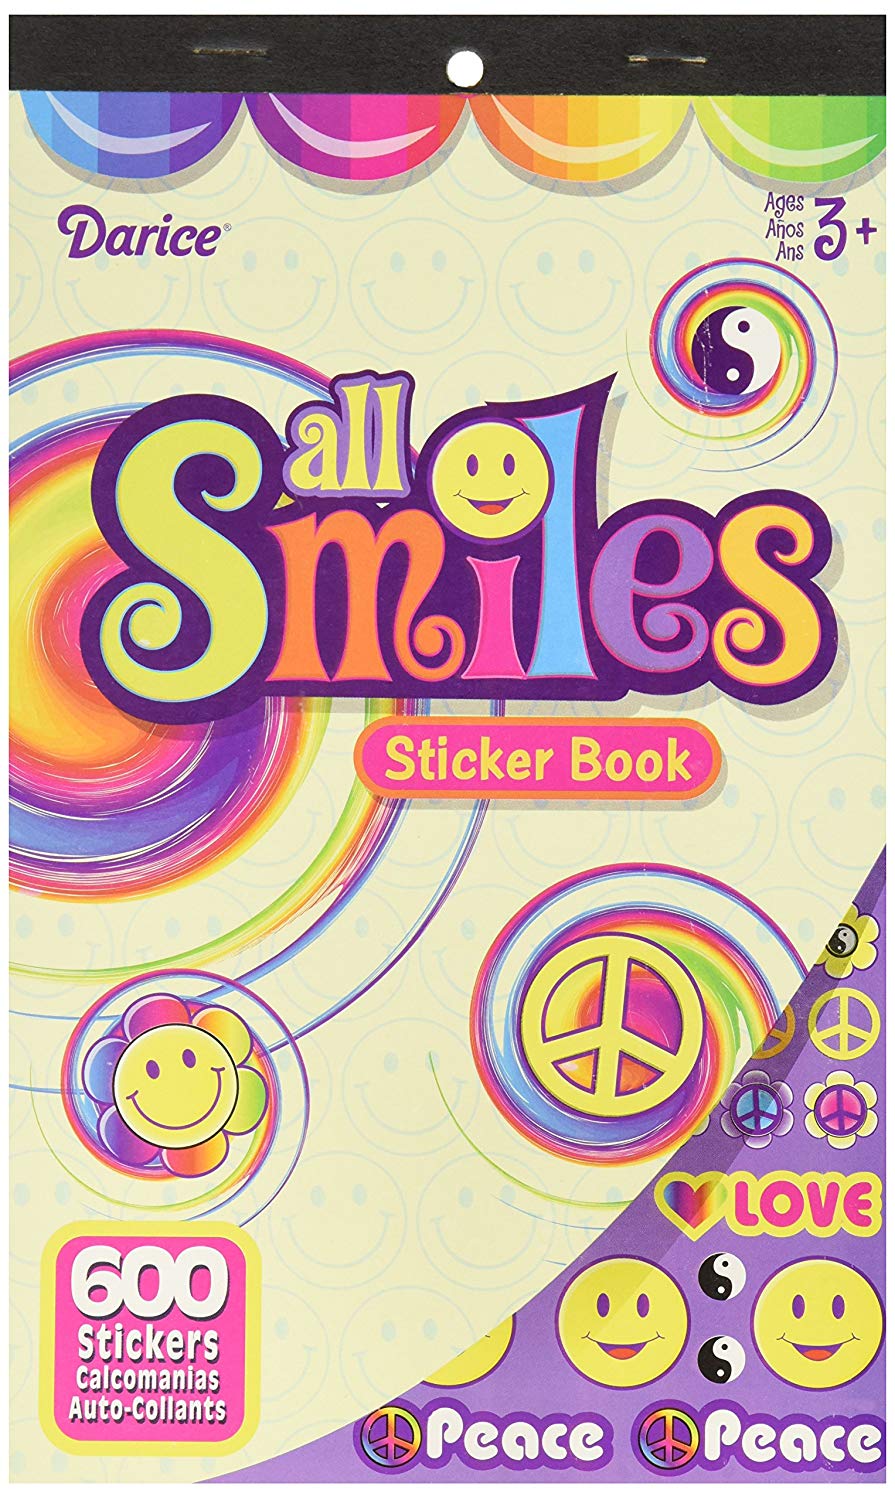 All Smiles Smiley Face Sticker Book